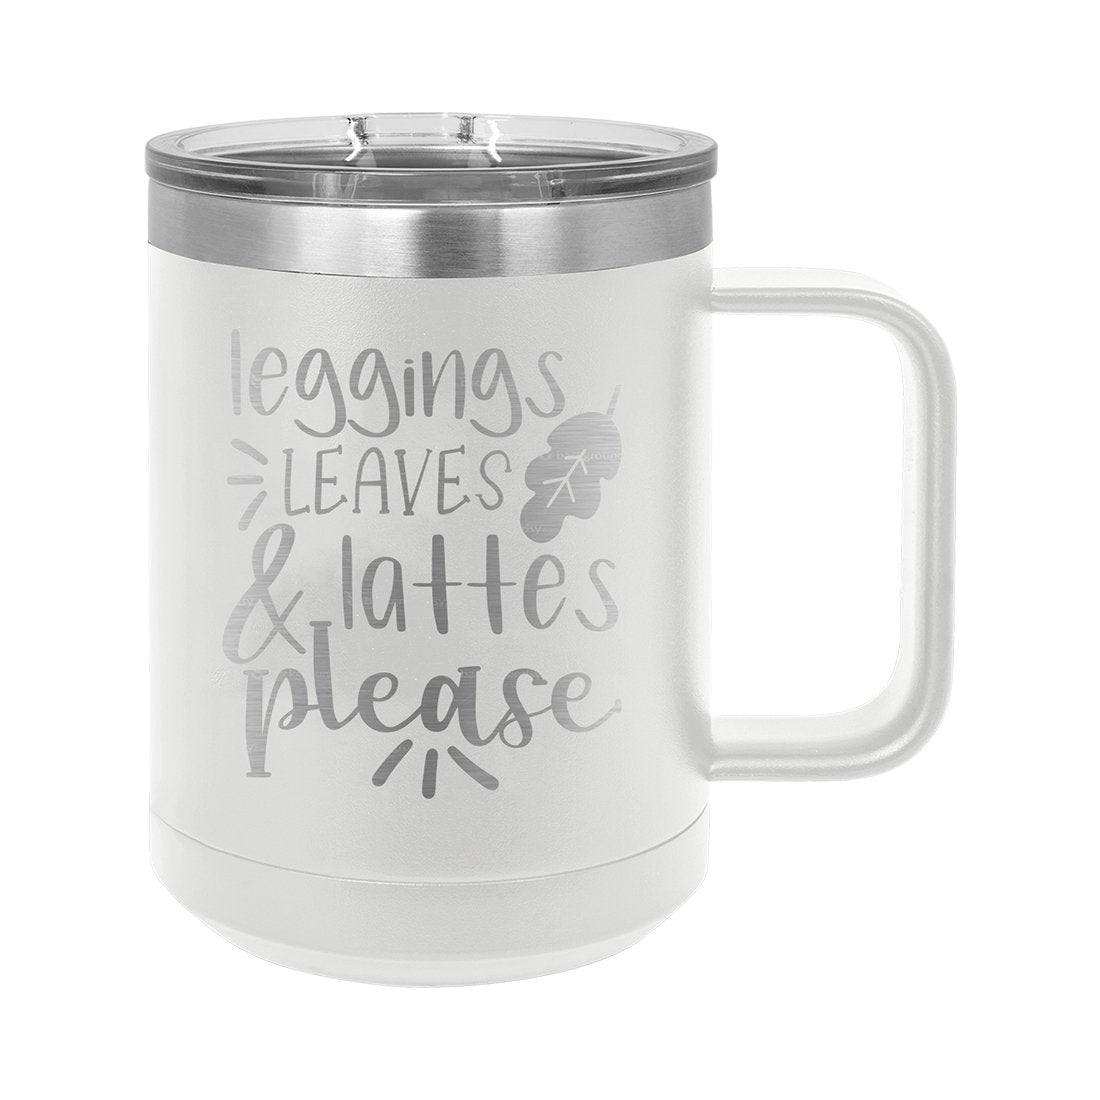 Leggings, Leaves, &amp; Lattes White 15oz Insulated Mug